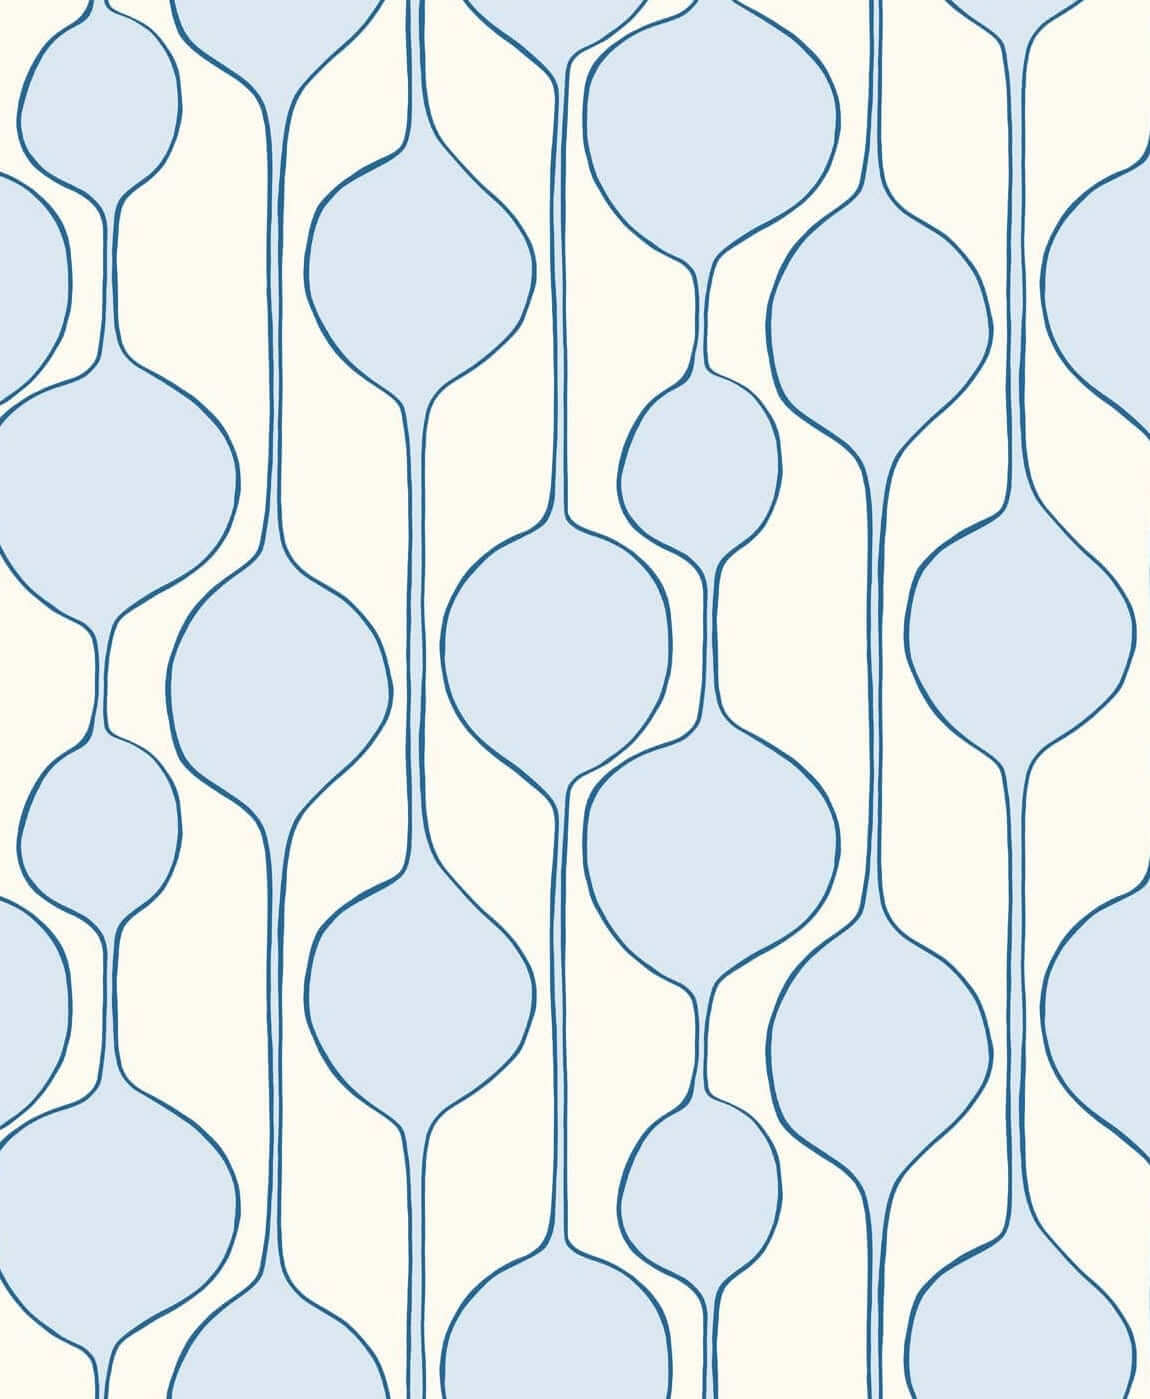 Seabrook Designs The Simple Life Minimalist Geometric Wallpaper - Baby Blue